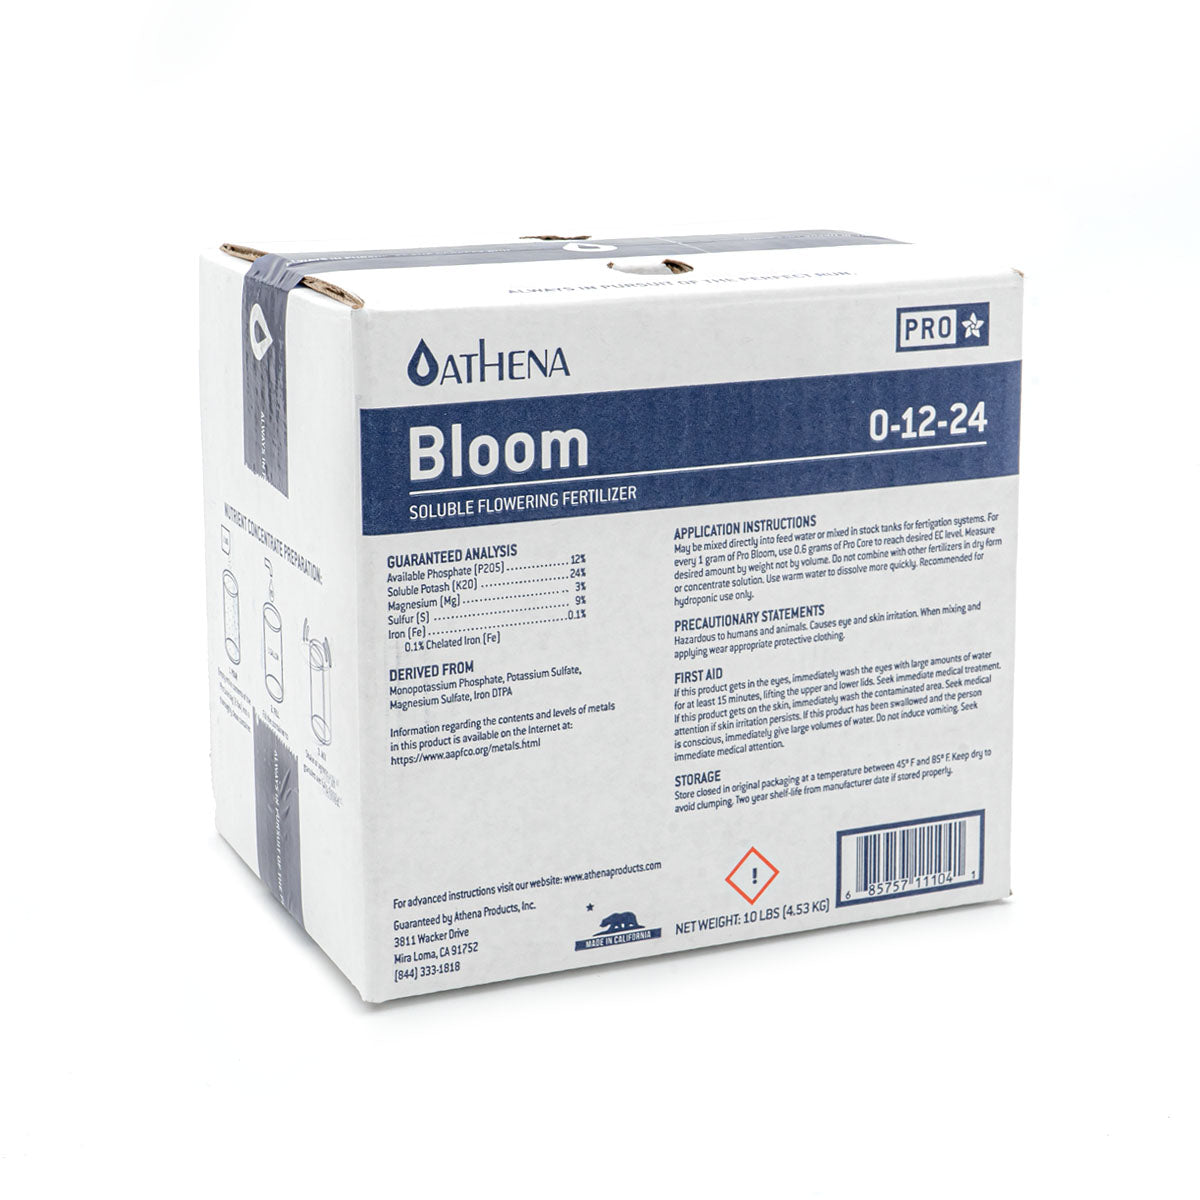 Athena Bloom Pro Line 2 pound powdered nutrient